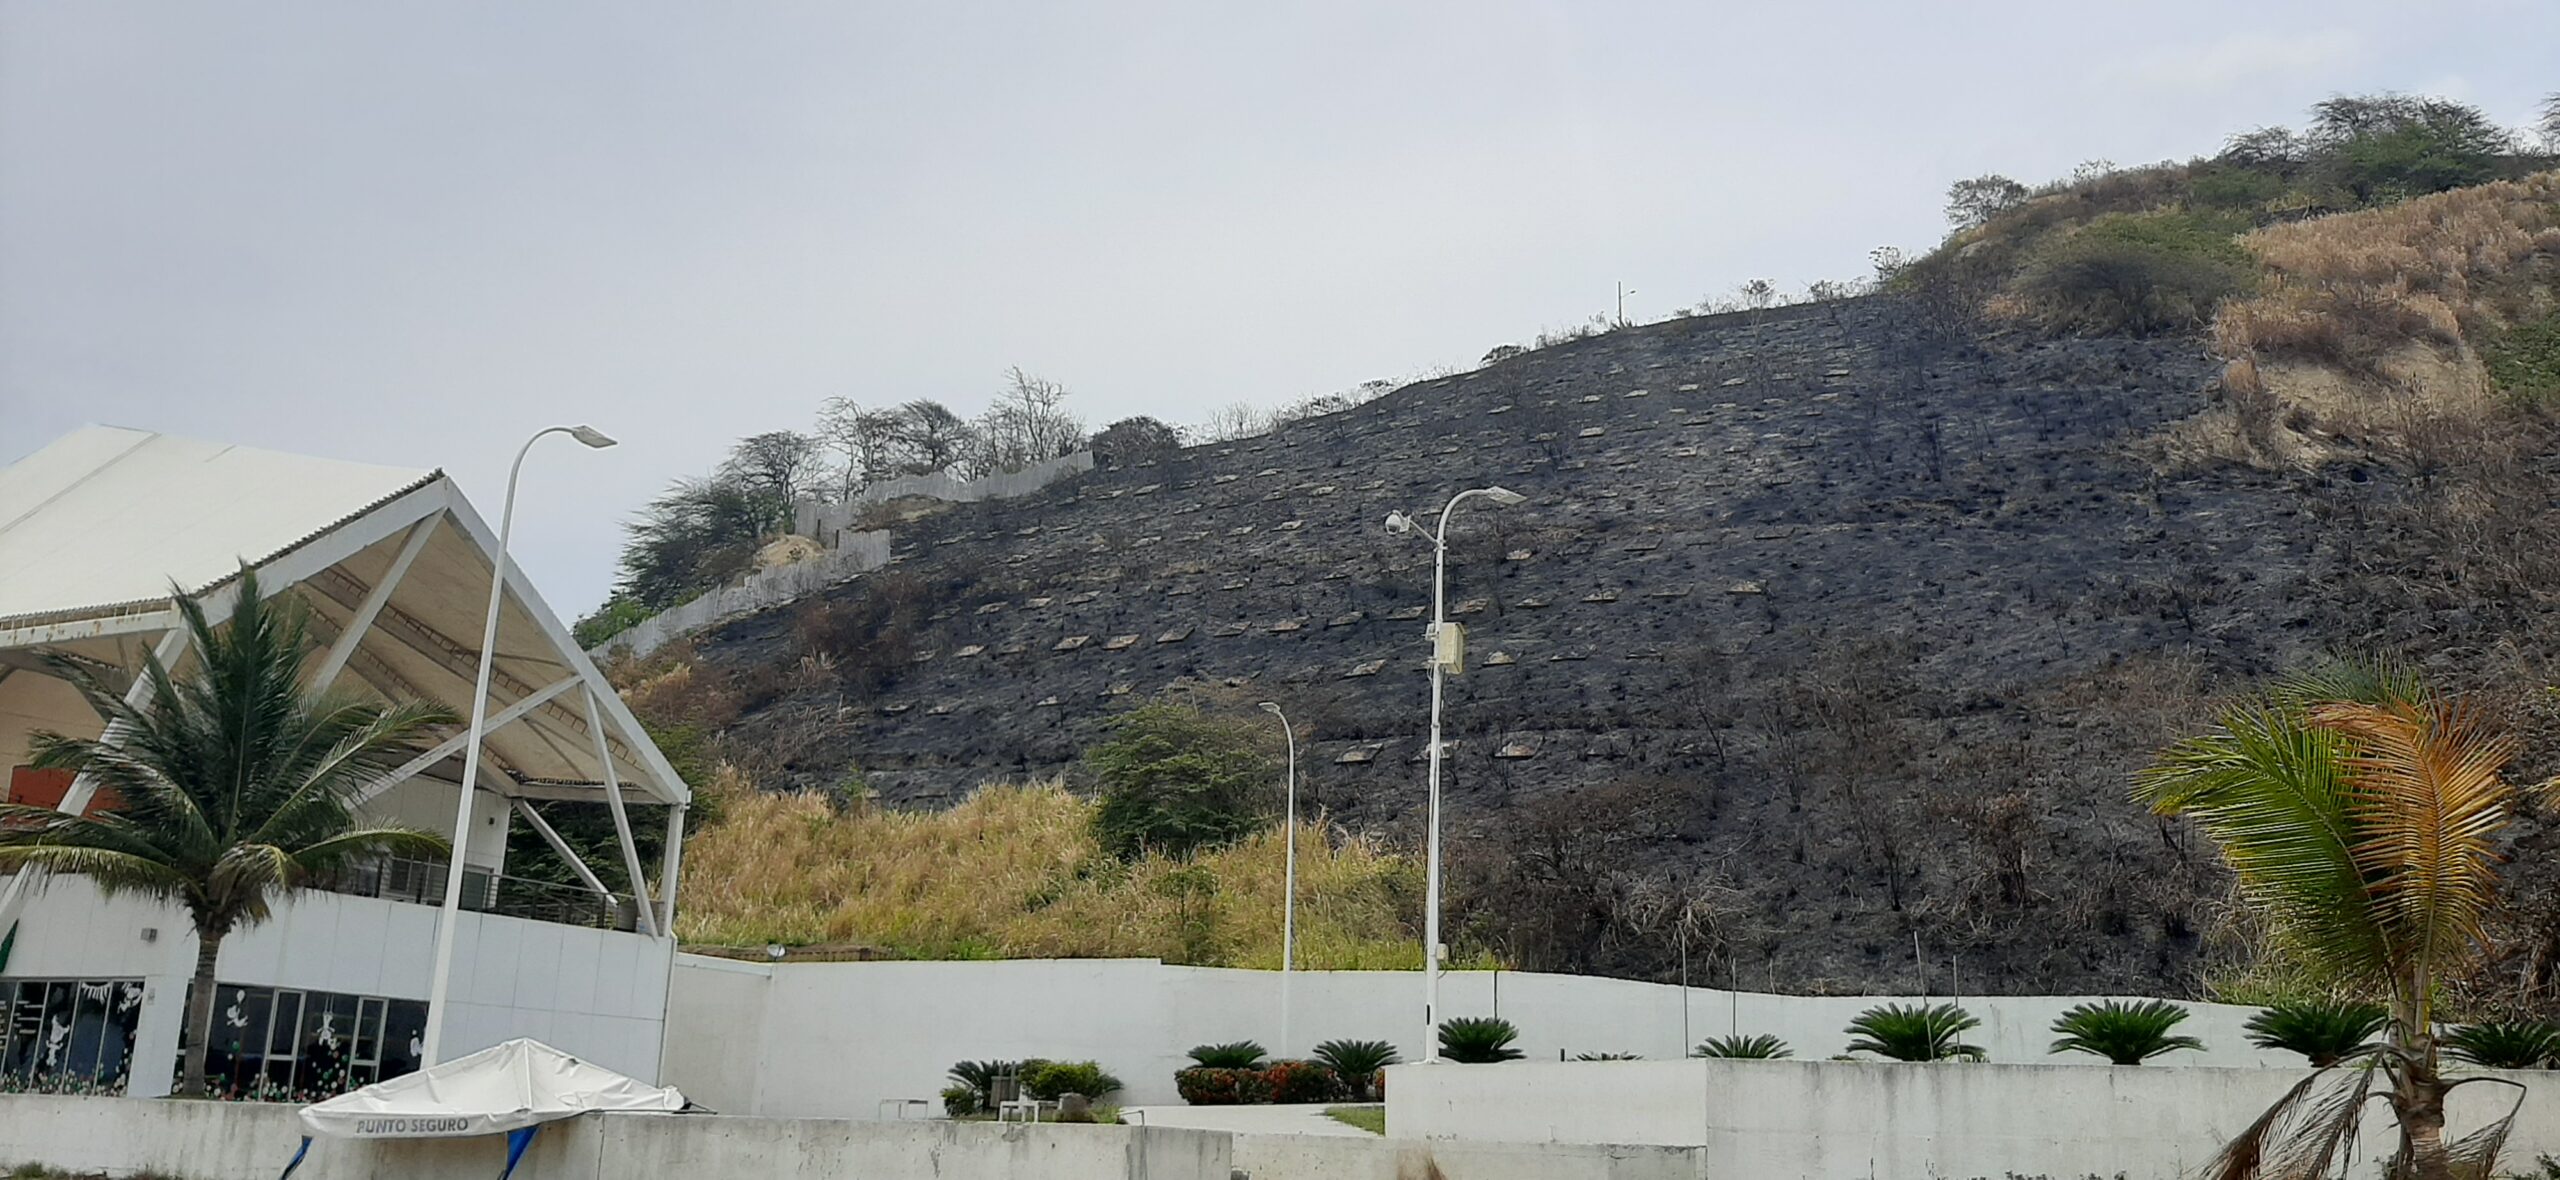 Incendio forestal se da por falta de precaución en Las Palmas